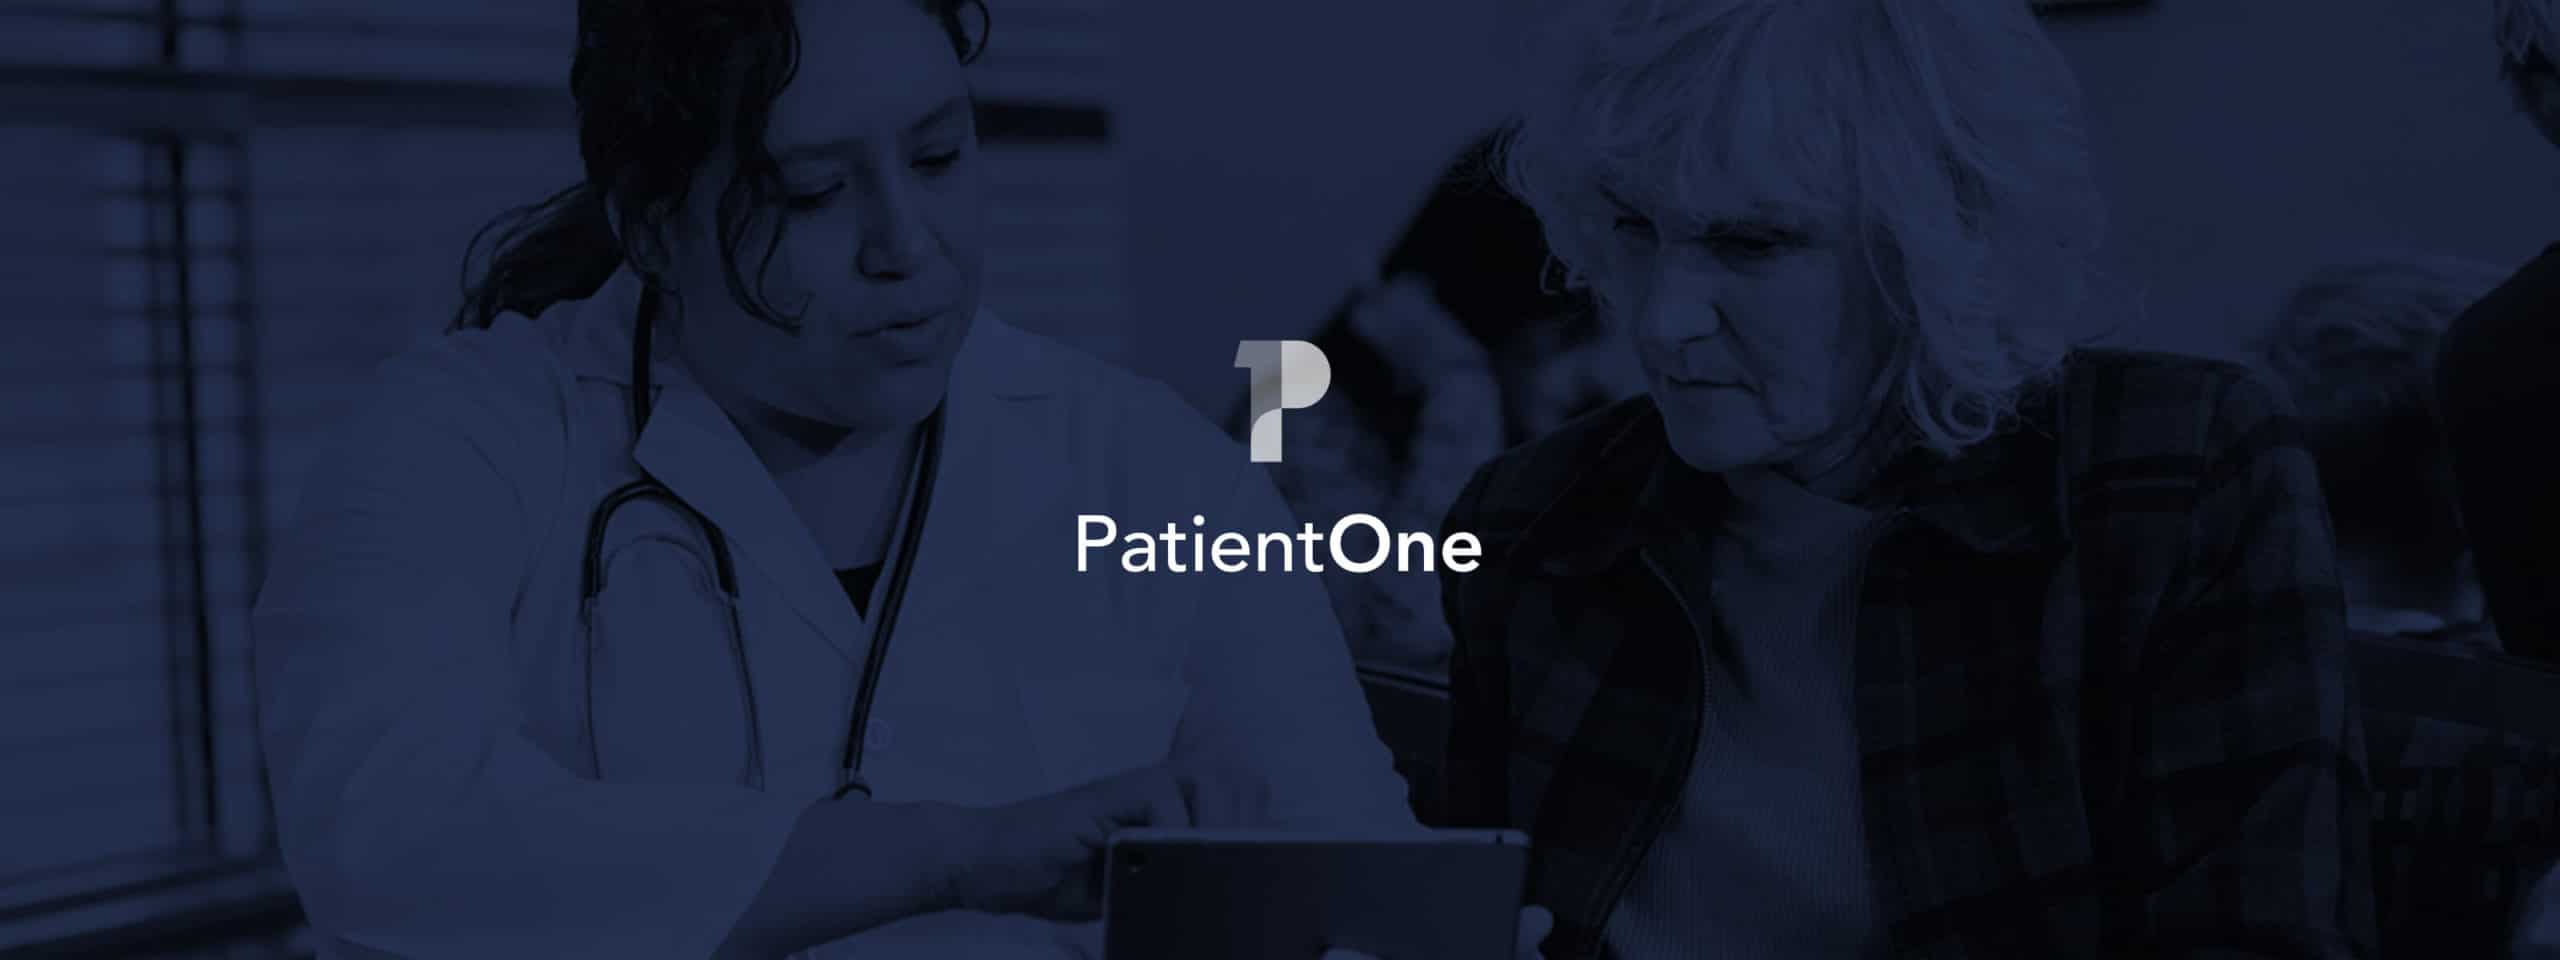 PatientOne logo and hero